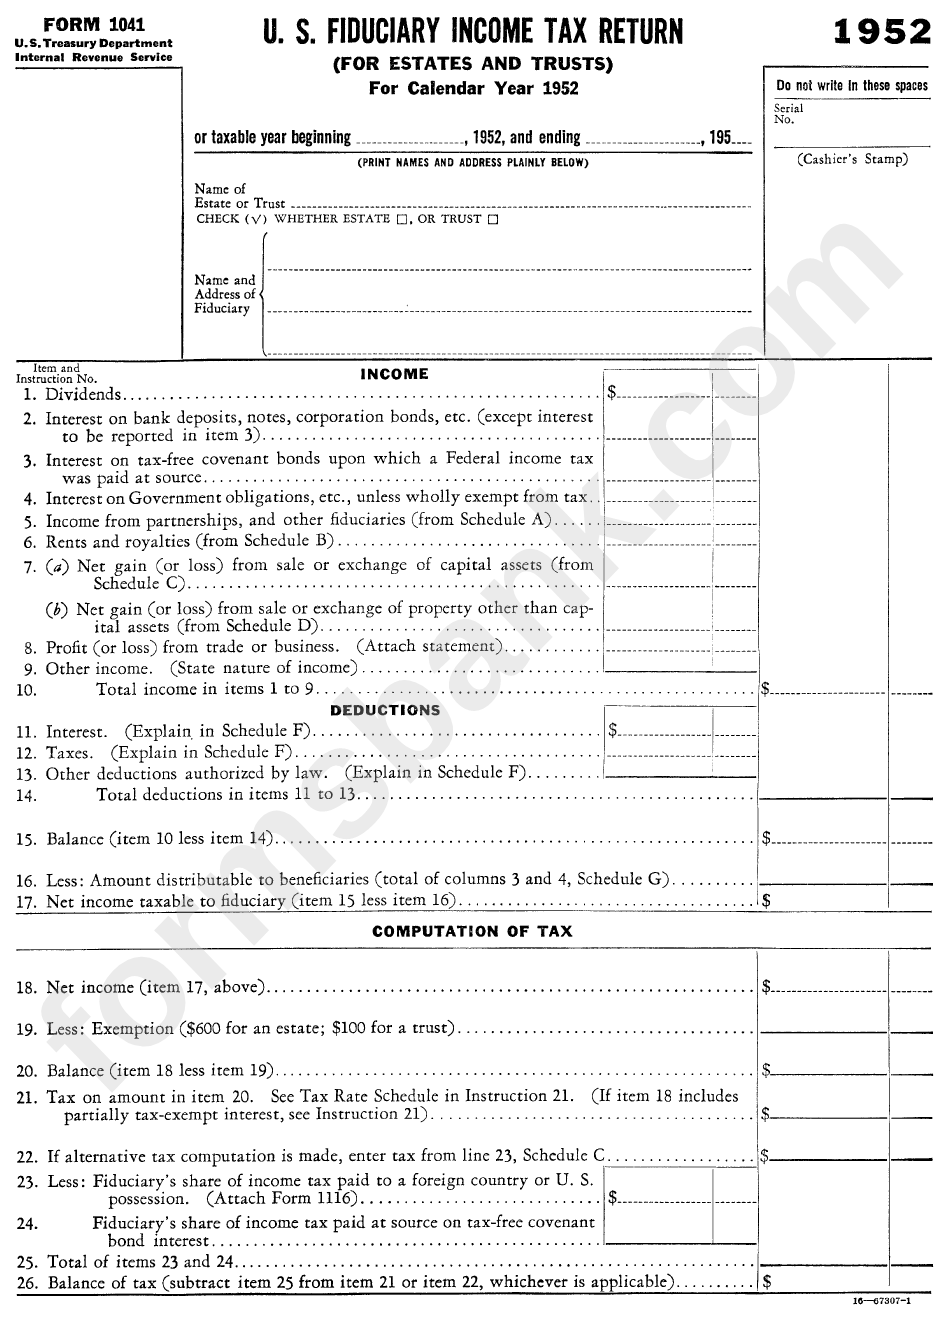 Form 1041 - U.s. Fiduciary Income Tax Return (For Estates And Trusts) - 1952